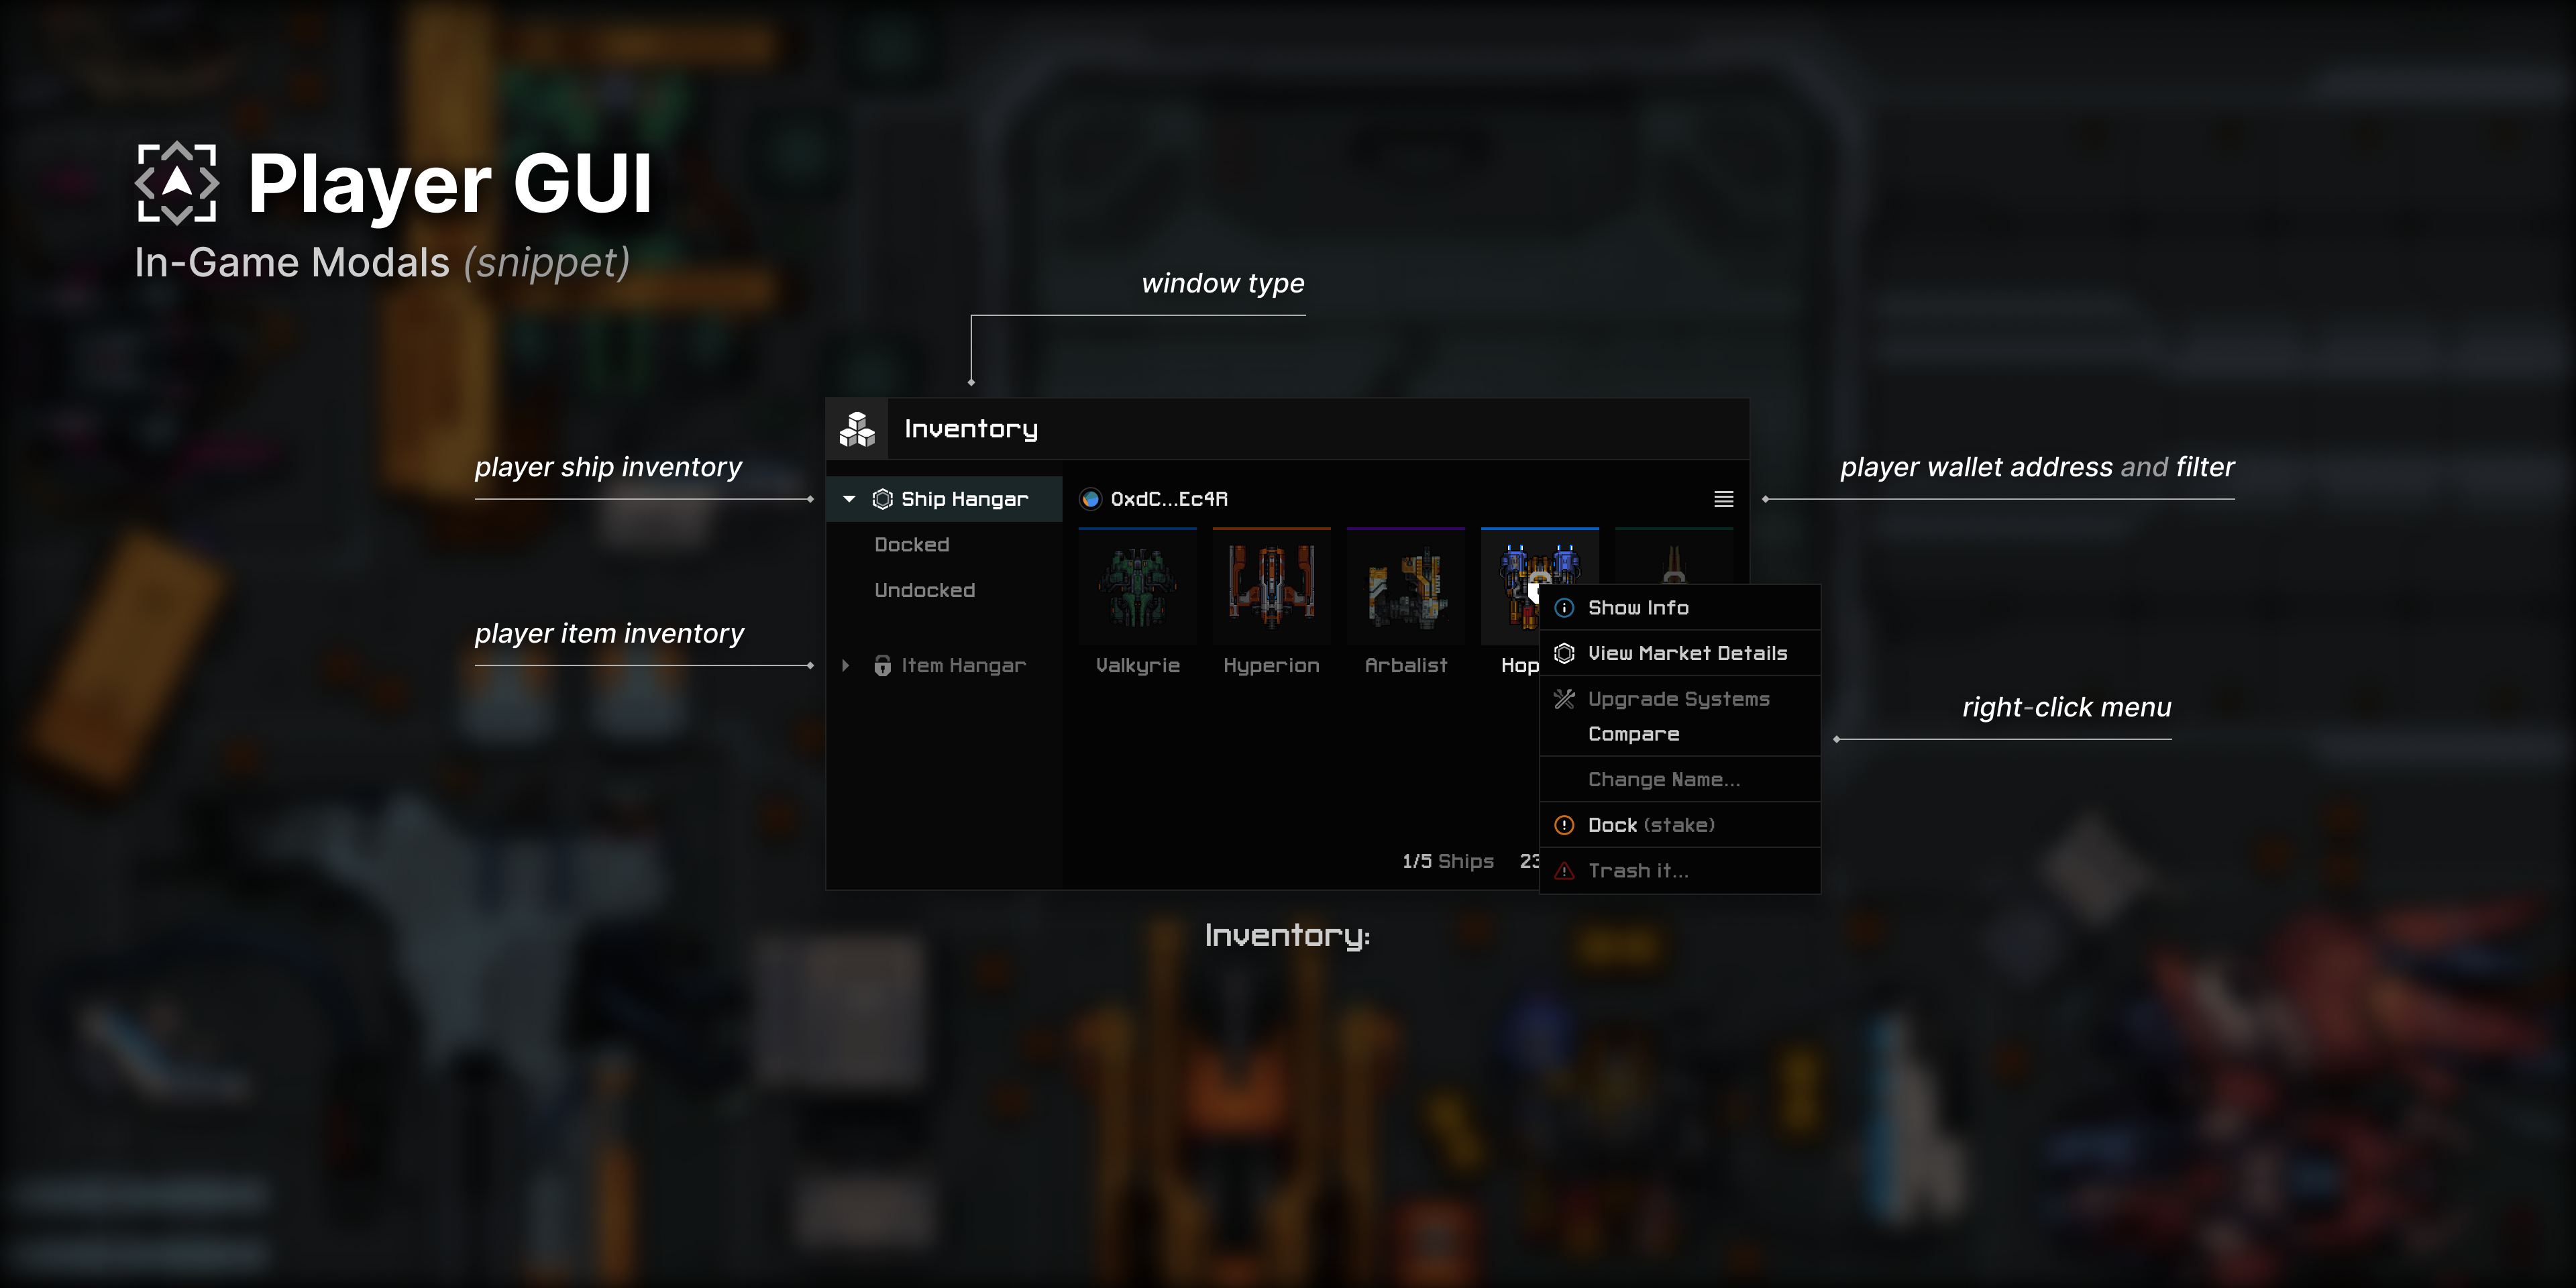 Player inventory window - ship context menu